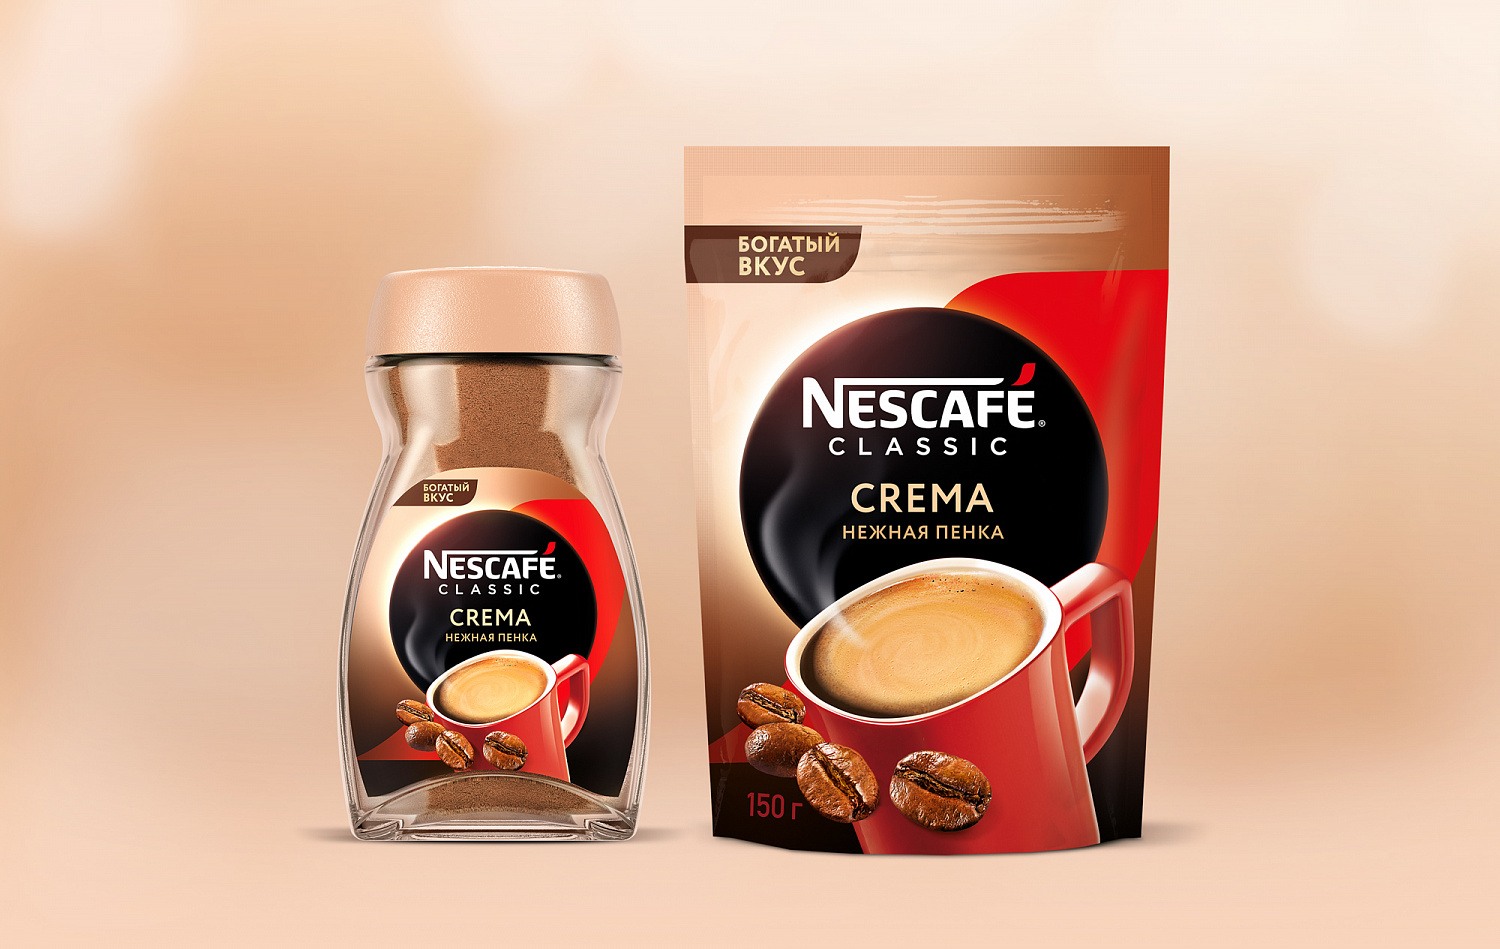 Nescafe Classic Crema - Портфолио Depot